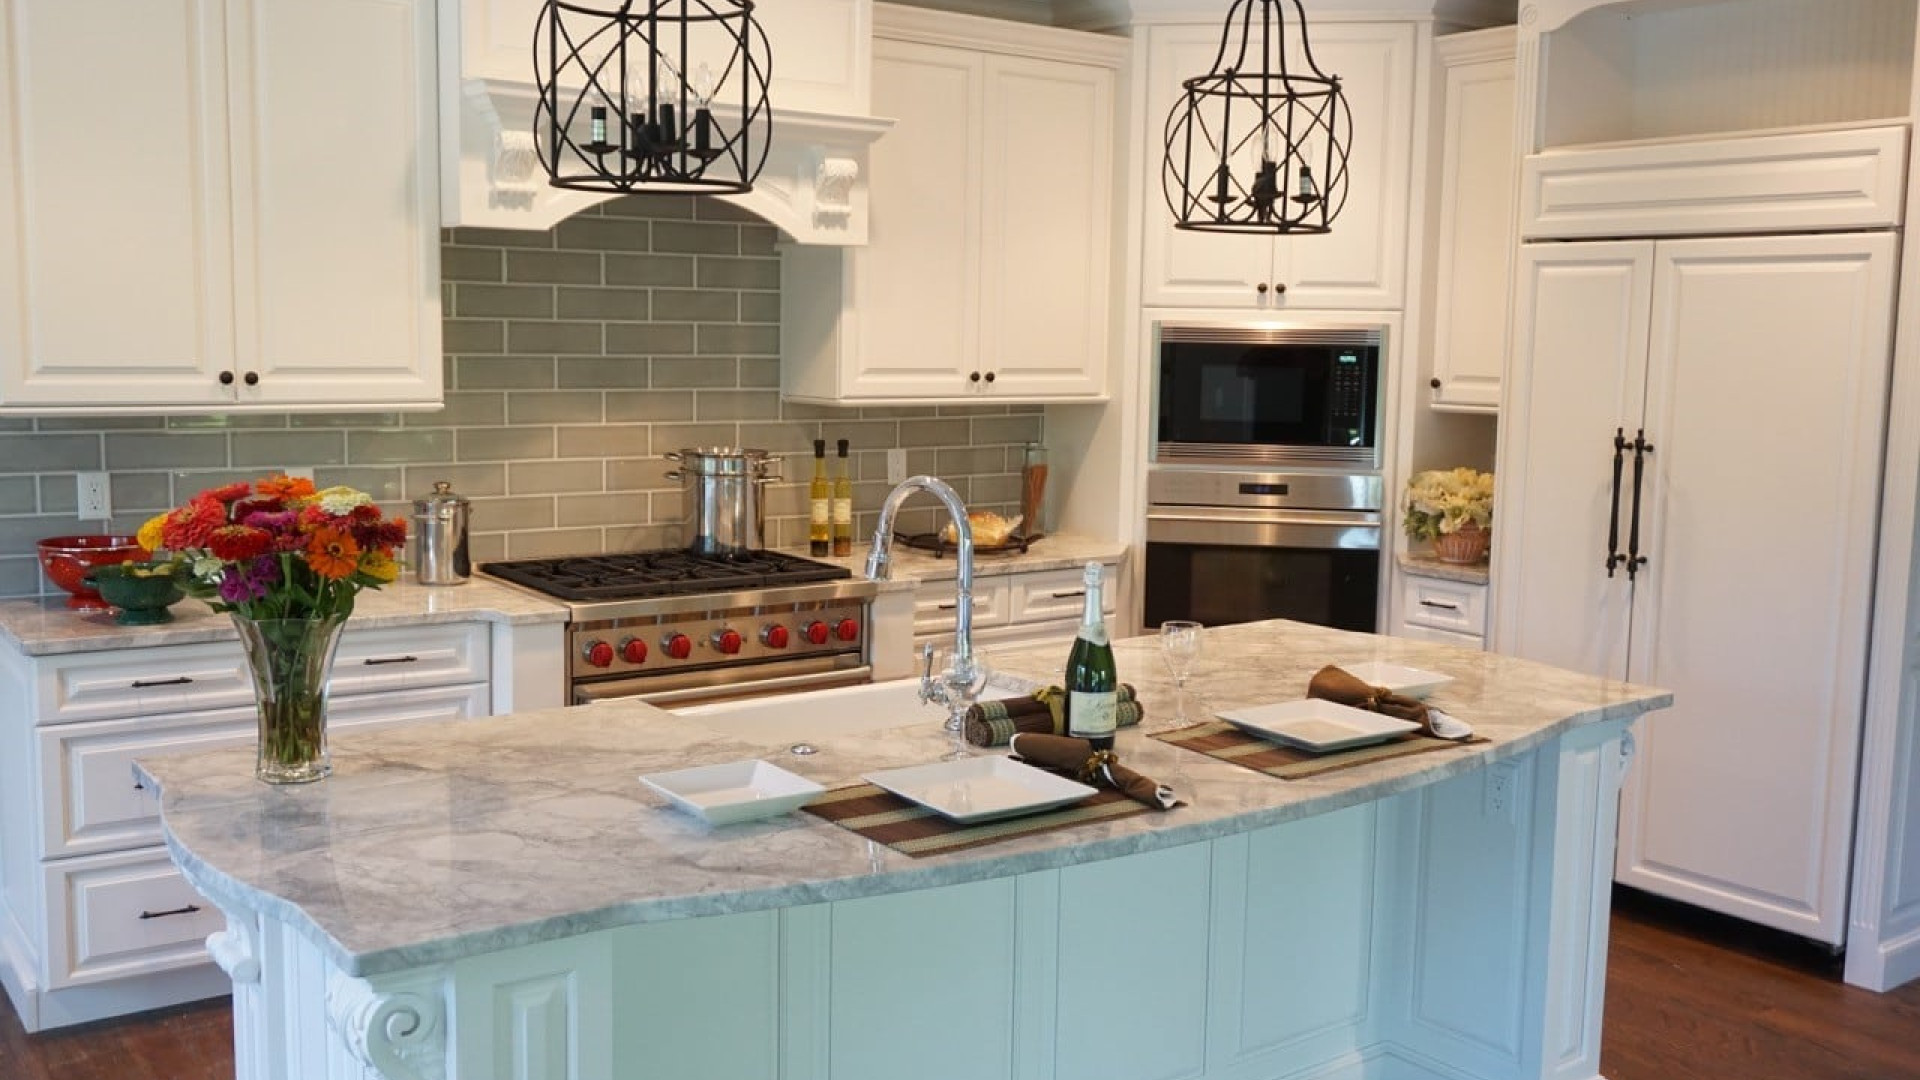 Luxury kitchen featuring a beautiful blue island and custom backsplash, New Jersey